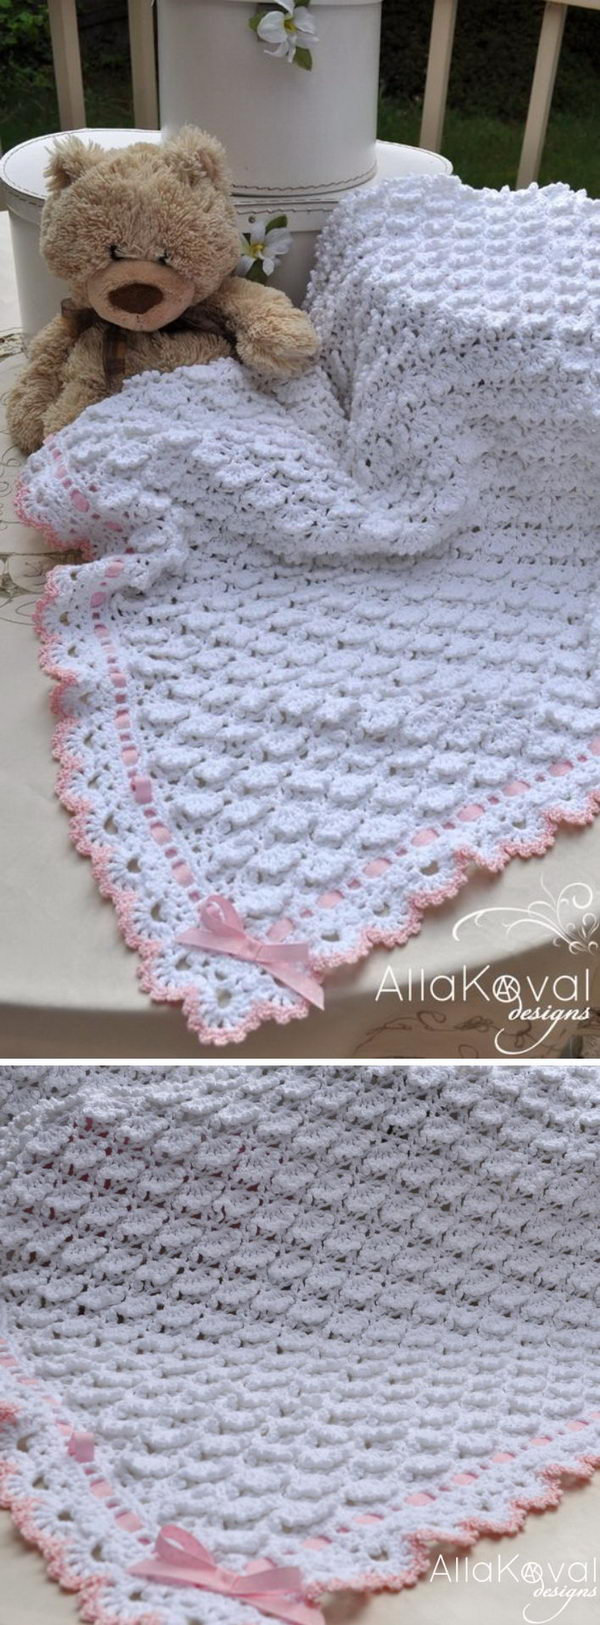 Crochet Pattern For Baby Blanket 30 Free Crochet Patterns For Blankets Hative